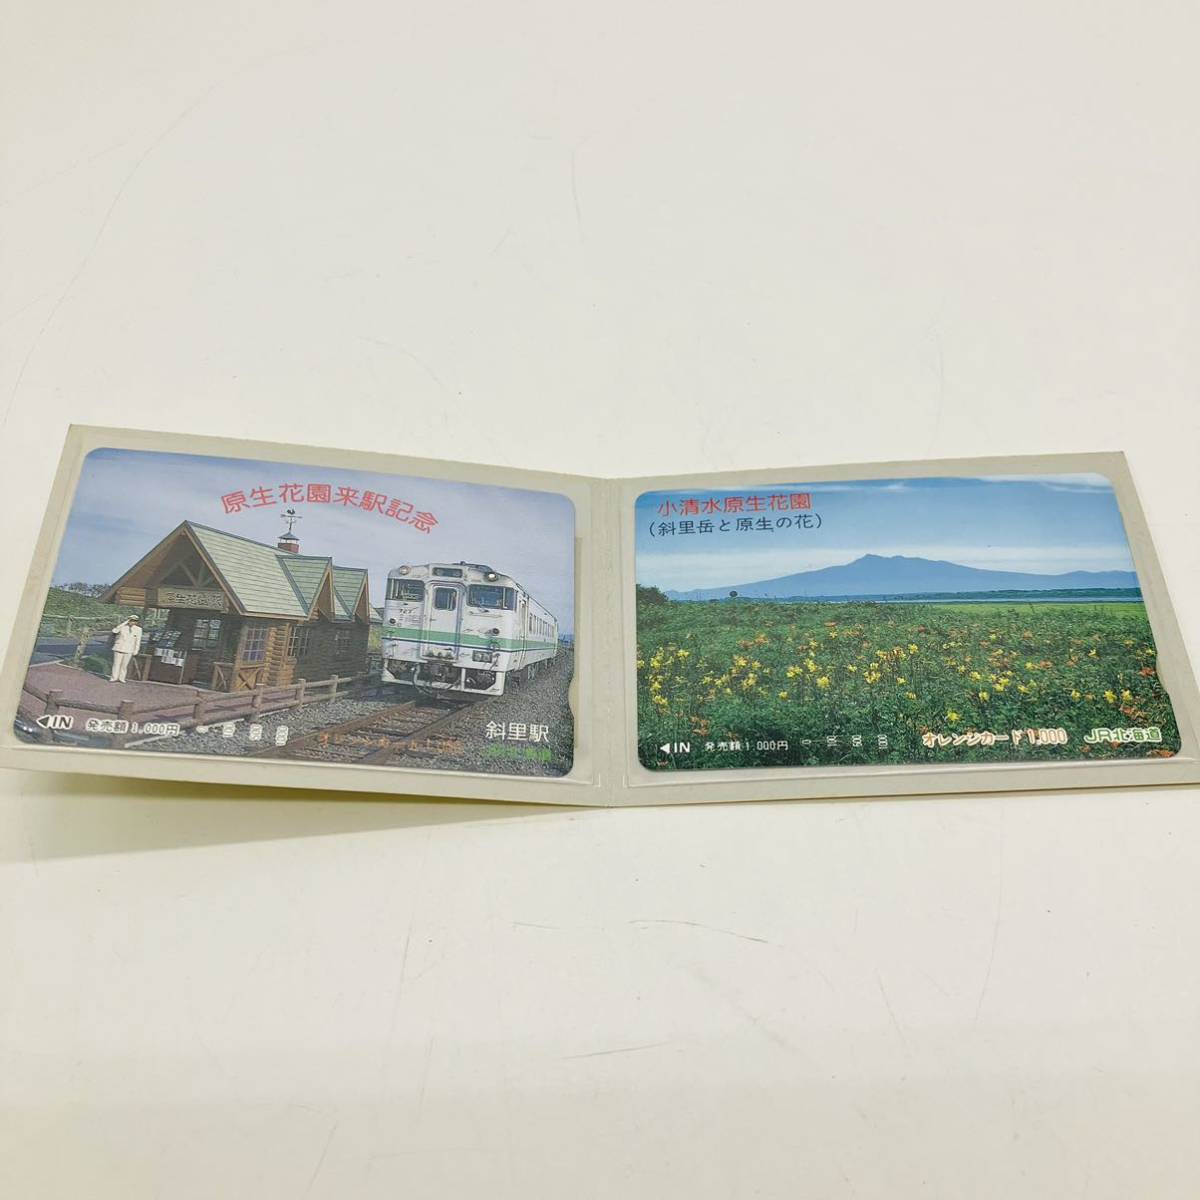 JR北海道 原生花園来駅記念 オレンジカード 2枚セット 未使用品 商品